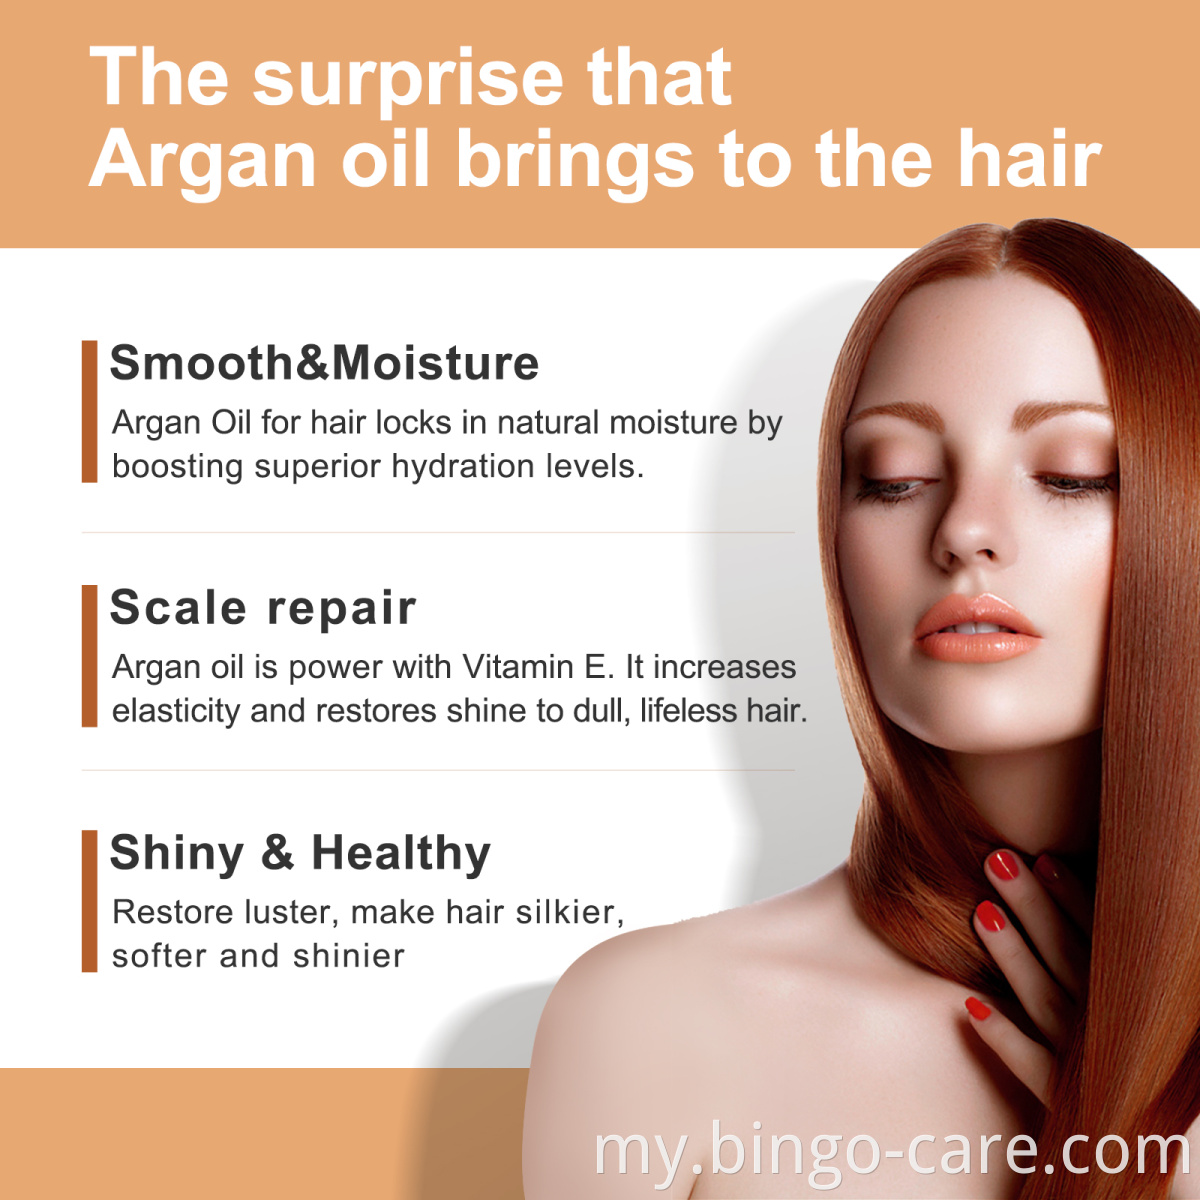 Private Label Argan oil Serum Hair Care Morocco Natural Organic 100% Pure Oil Argan မှ ထုတ်လုပ်ပါသည်။